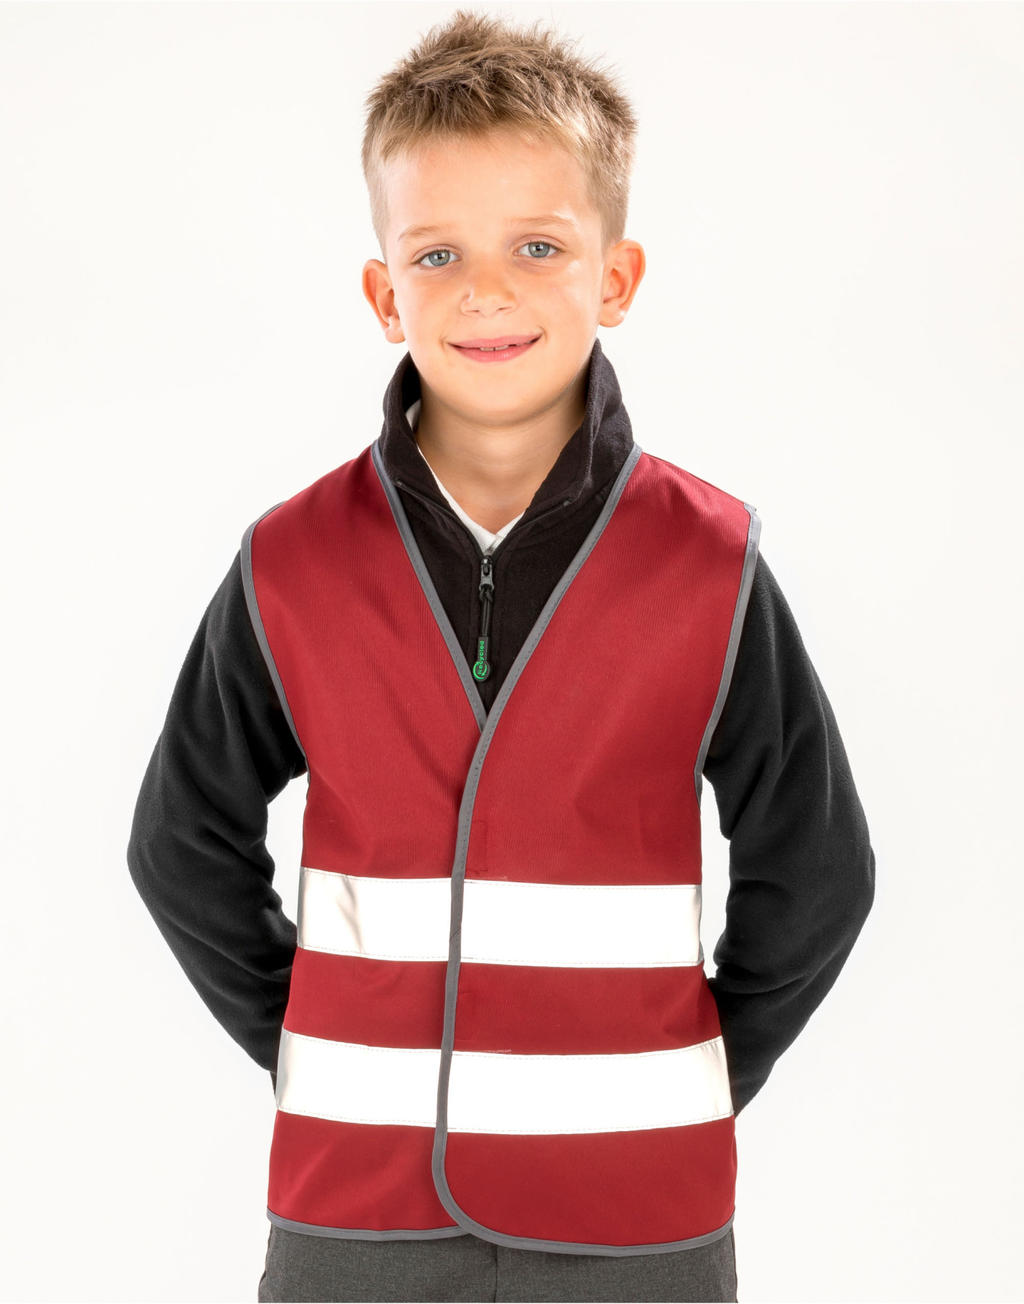  Junior Enhanced Visibility Vest in Farbe Navy